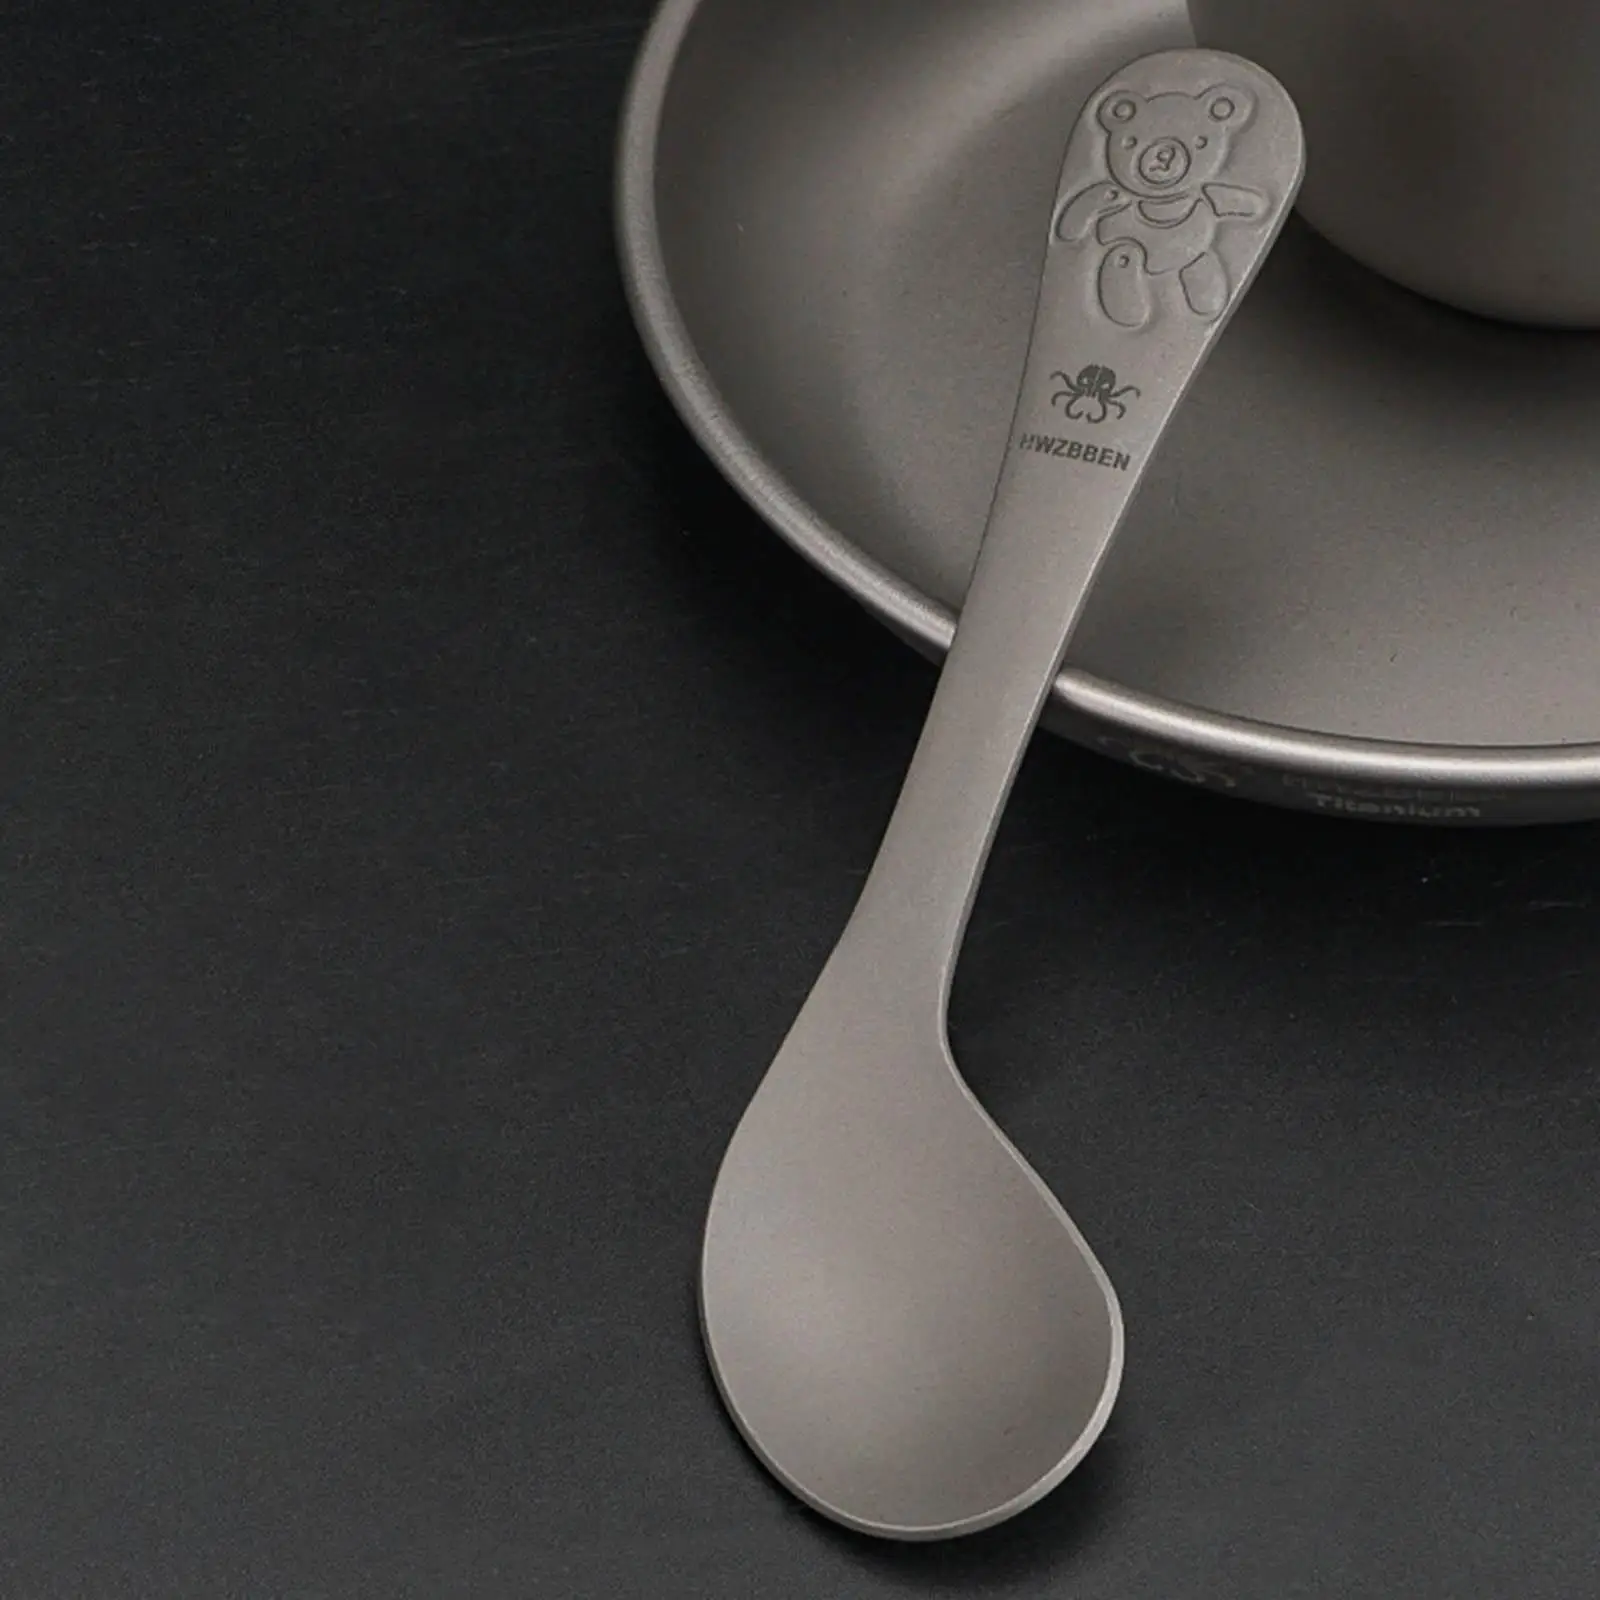 Titanium Soup Spoon Tableware Reusable Cutlery for Travel Home Restaurant Outdoor